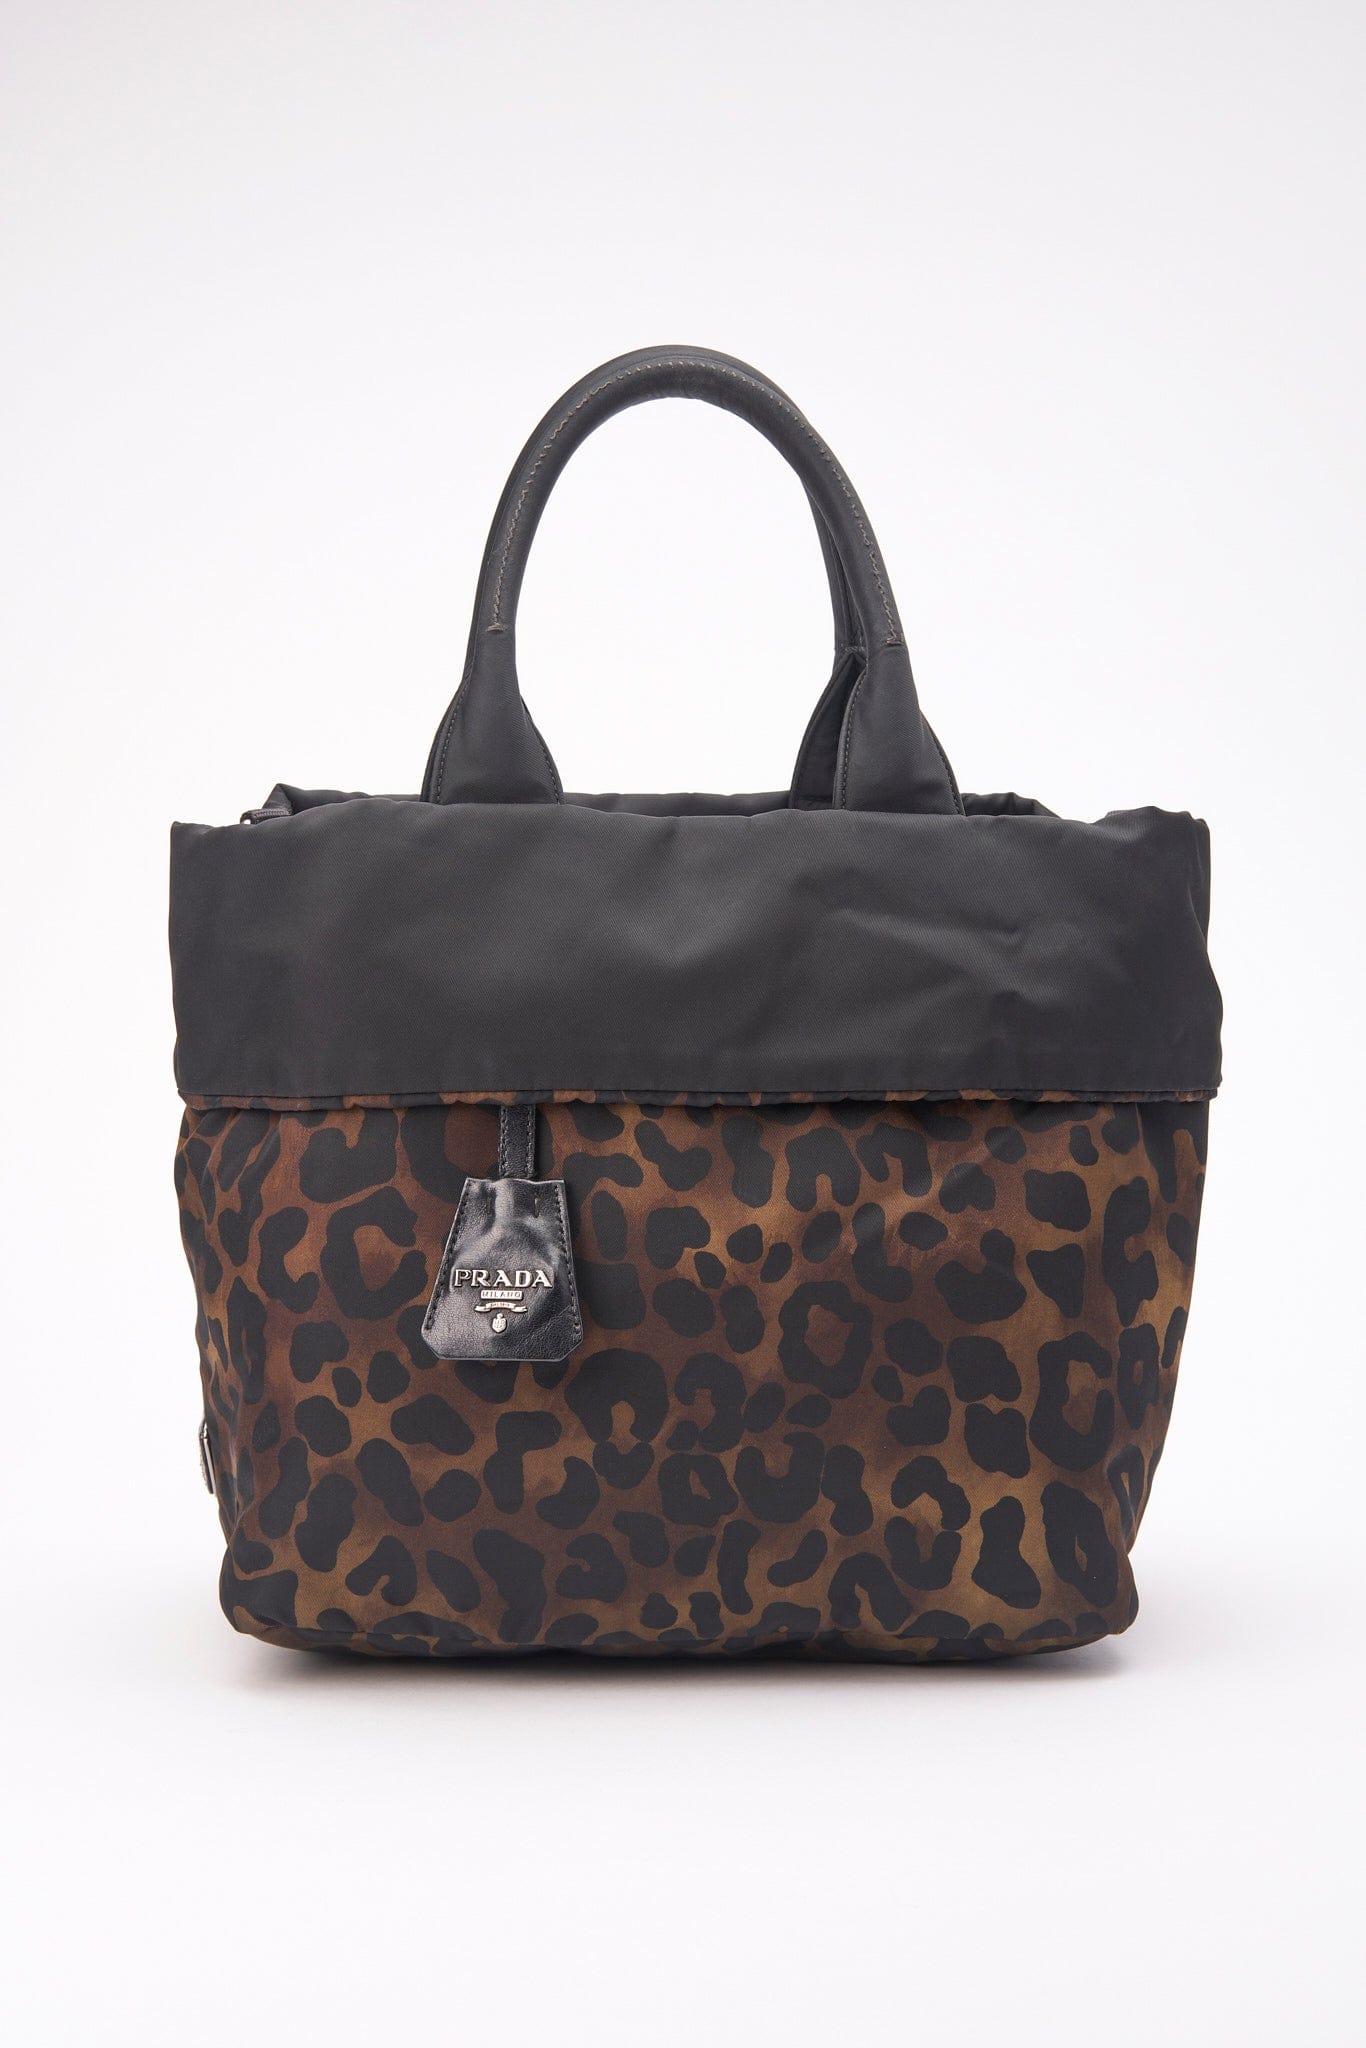 Prada Leopard Print Nylon Crossbody Bag